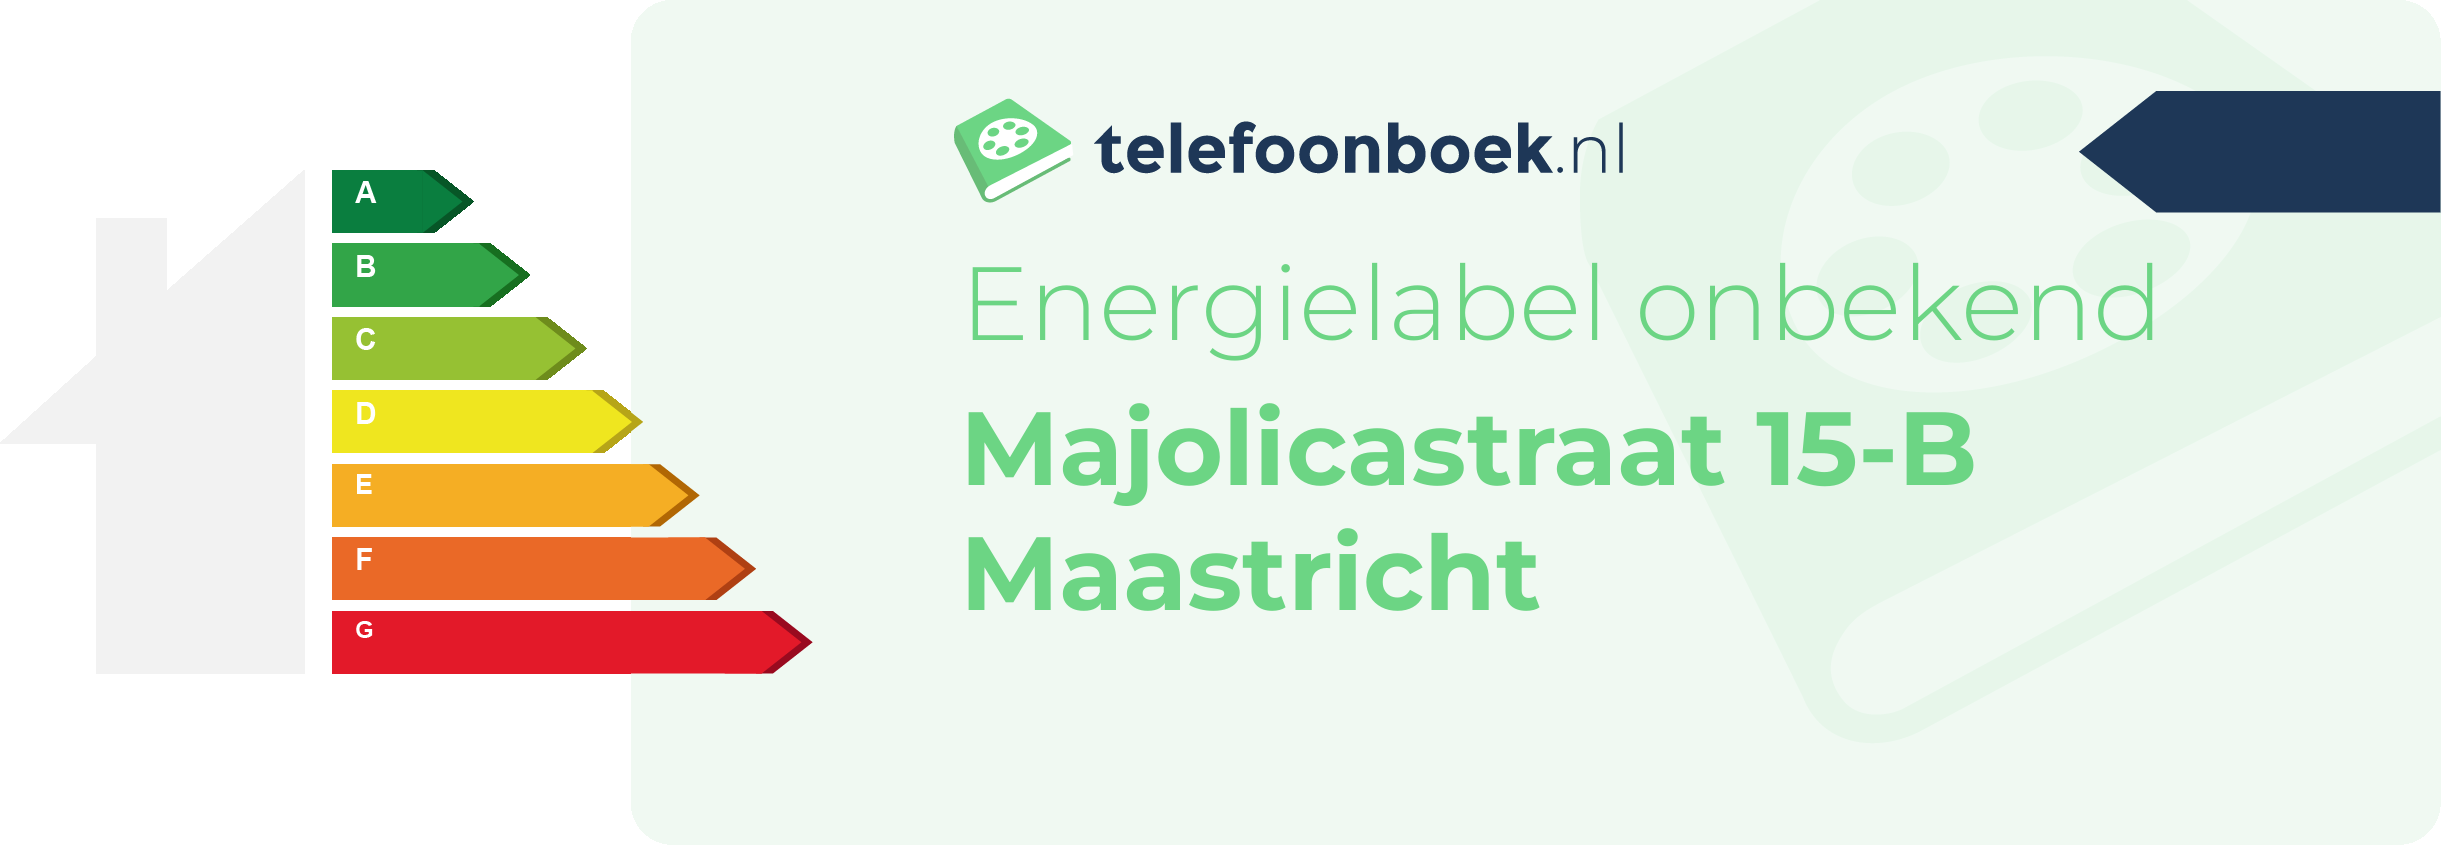 Energielabel Majolicastraat 15-B Maastricht